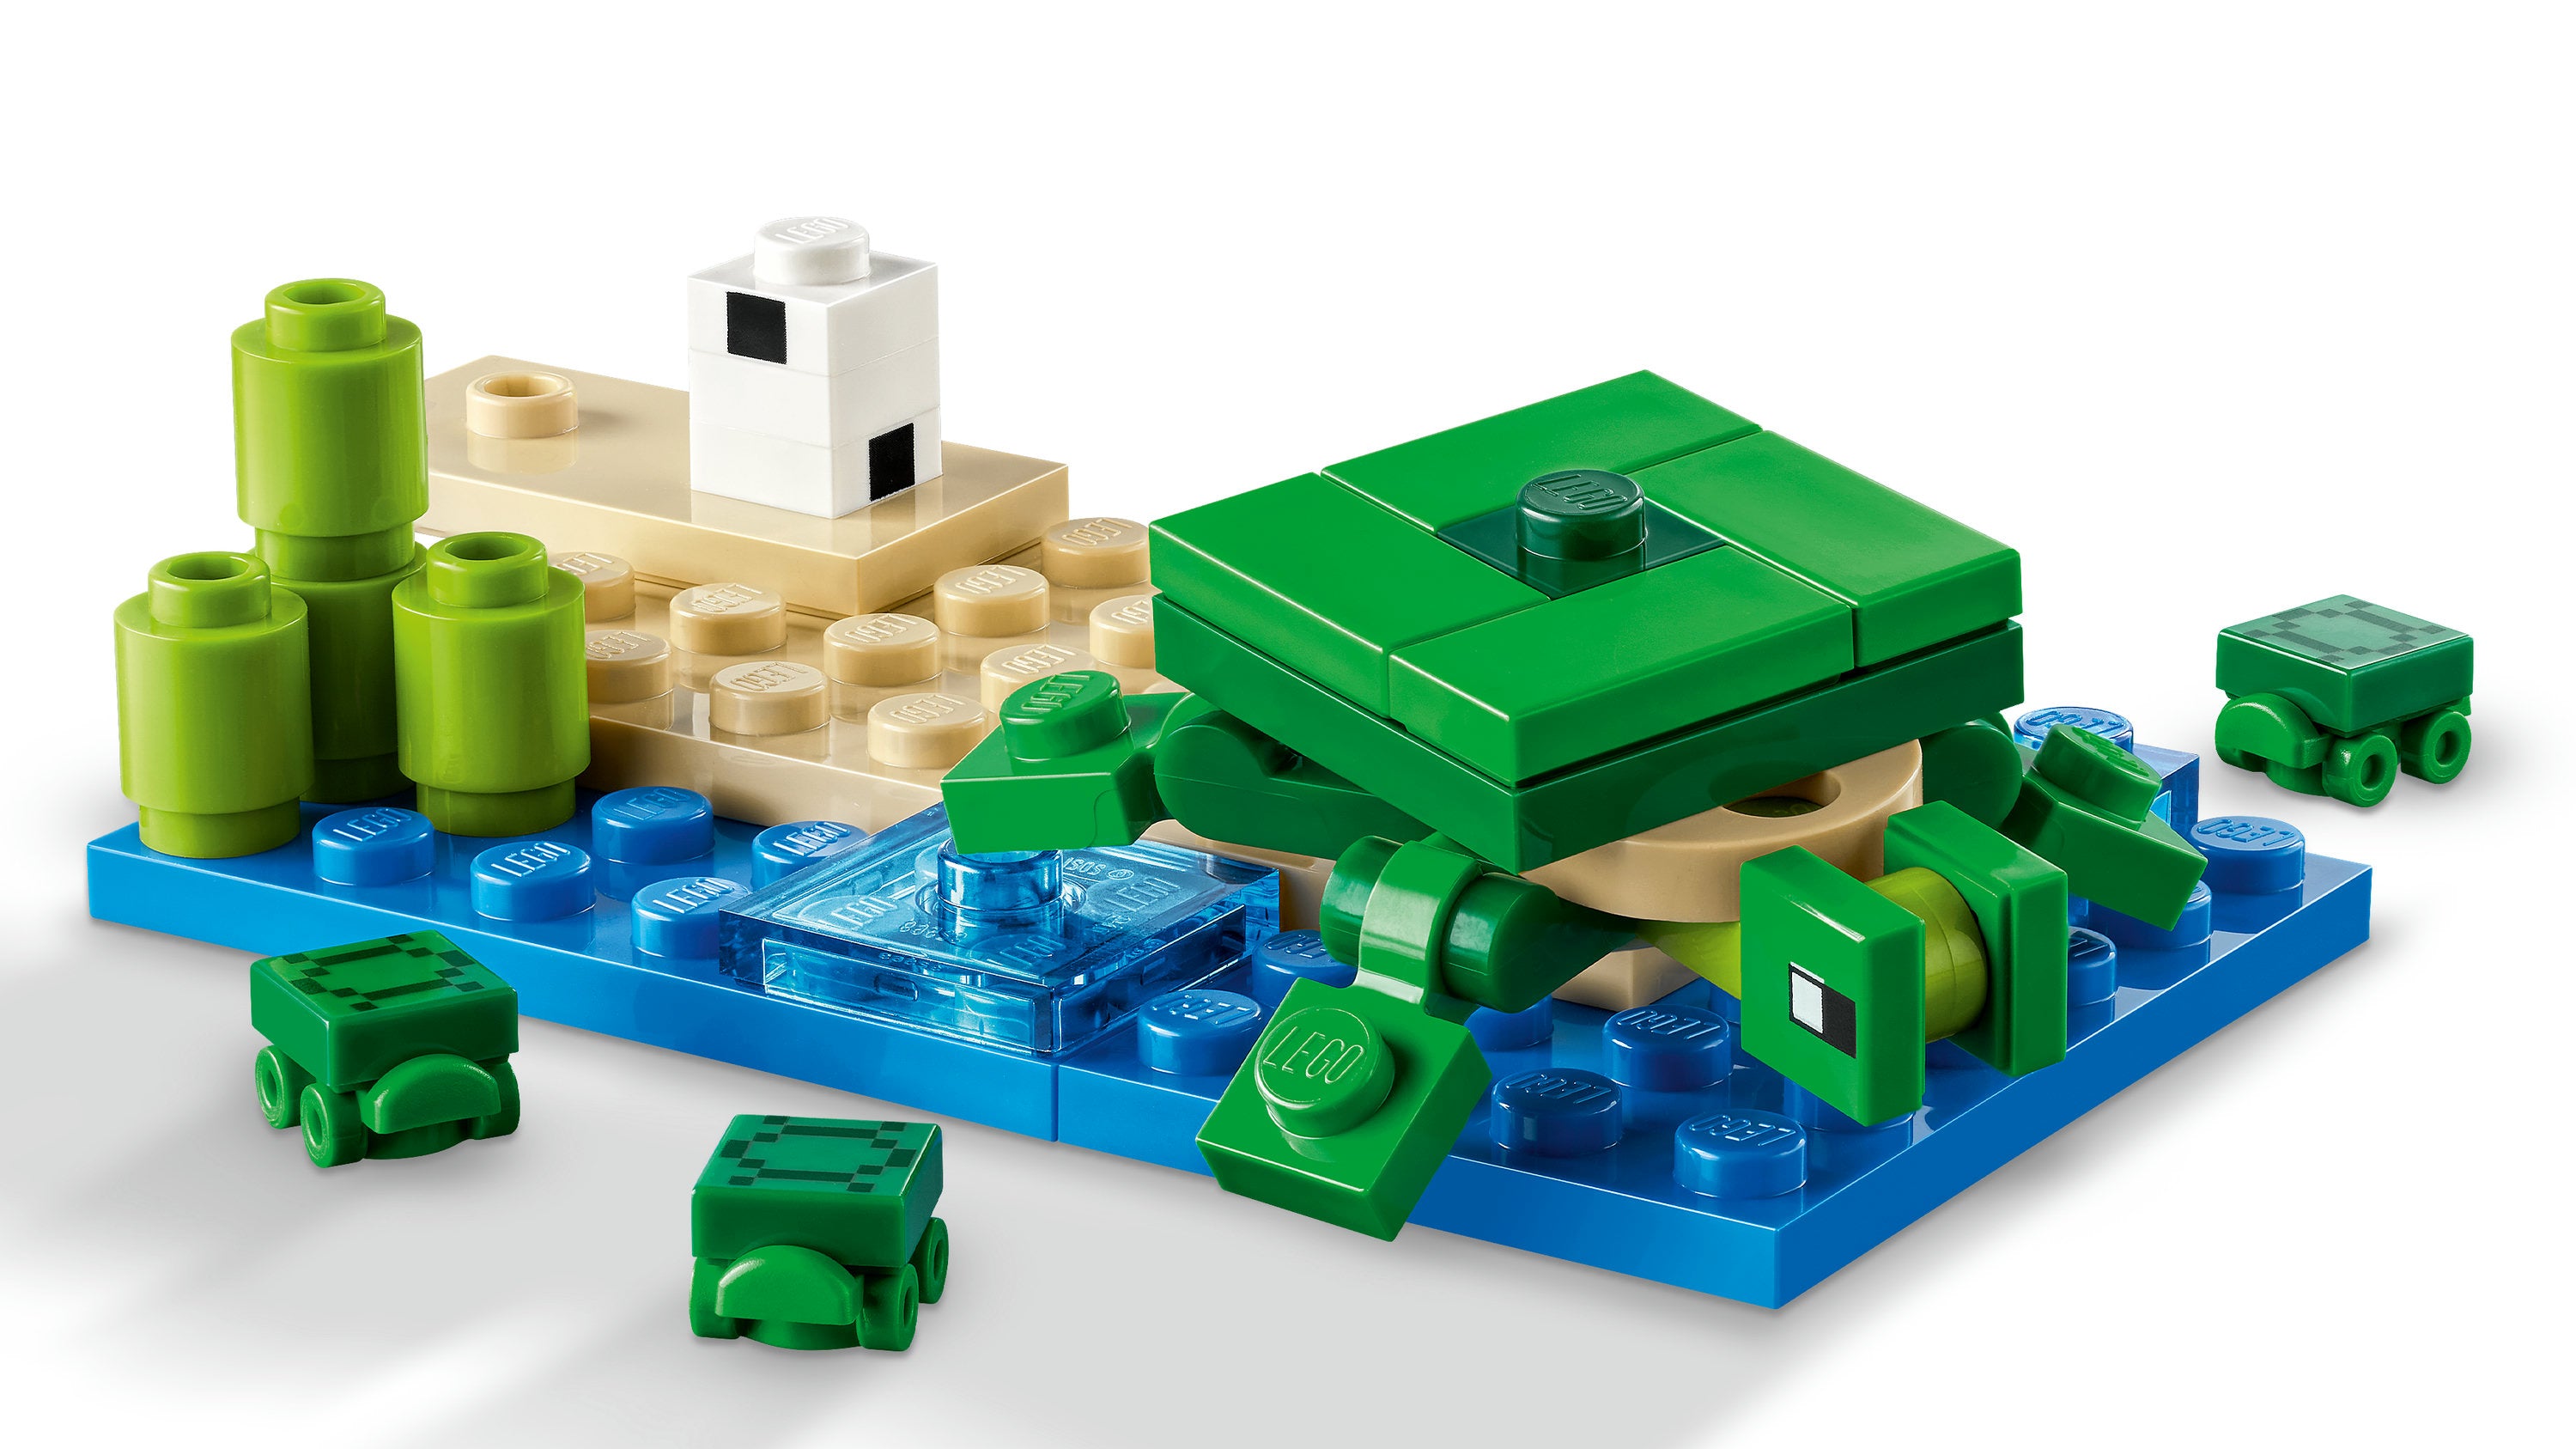 LEGO Minecraft - The Turtle Beach House LEGO